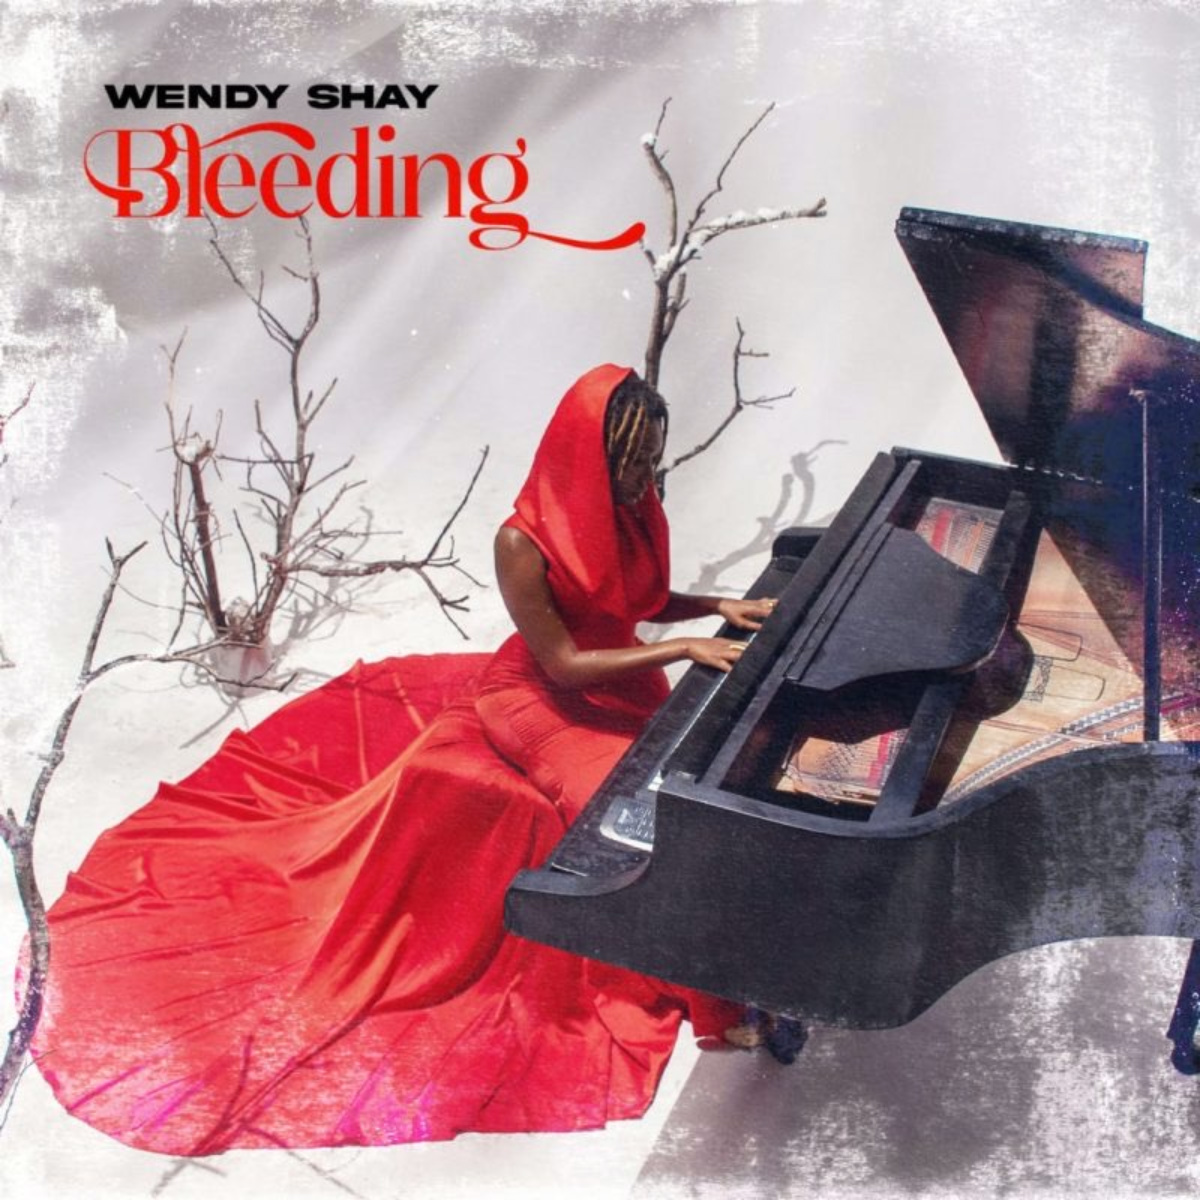 Bleeding by Wendy Shay